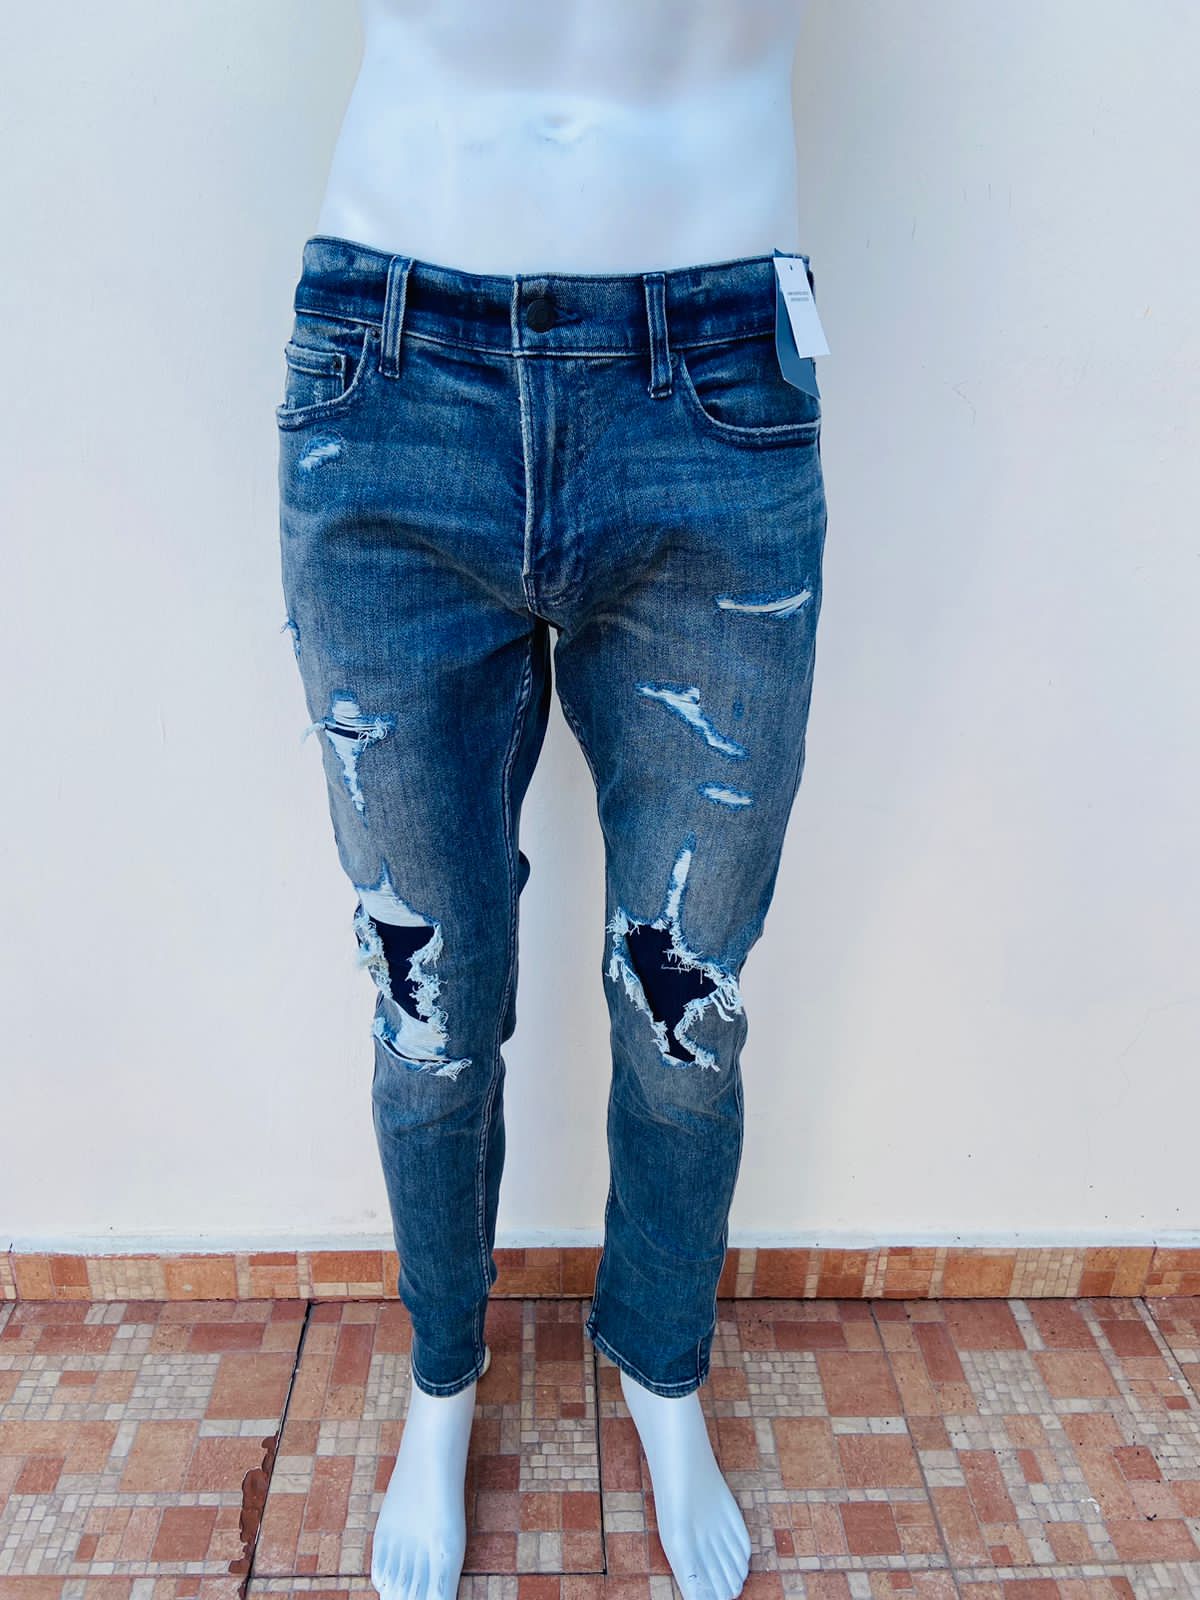 Pantalon Hollister original azul poco degradado con rasgado tapados AD